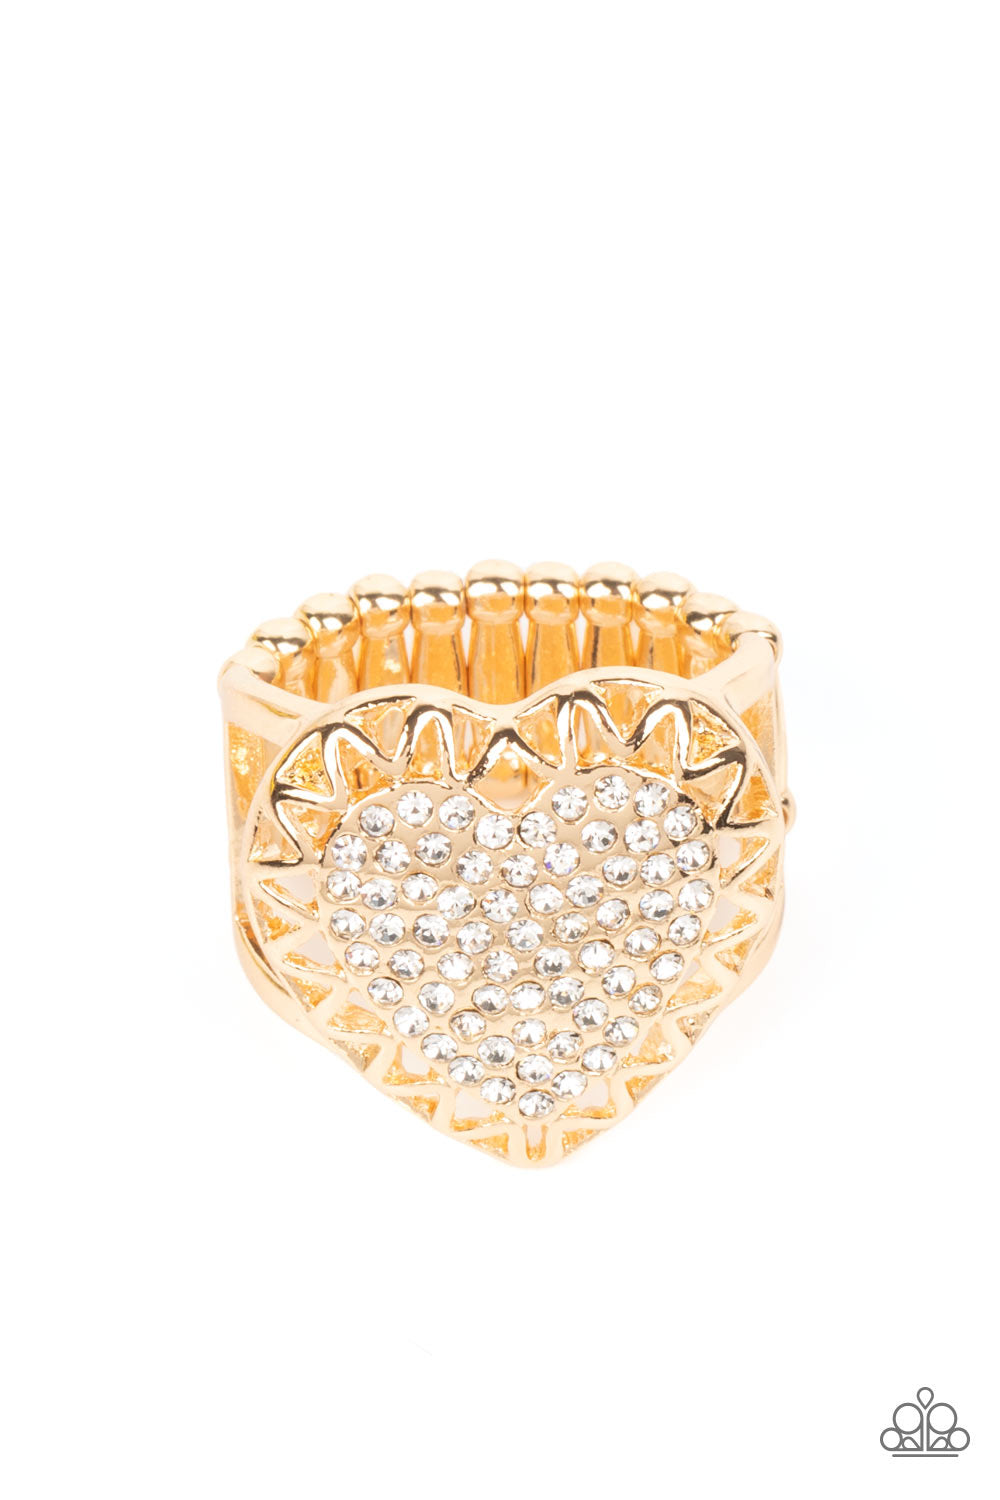 Paparazzi Romantic Escape - Gold Ring   -Paparazzi Jewelry Images